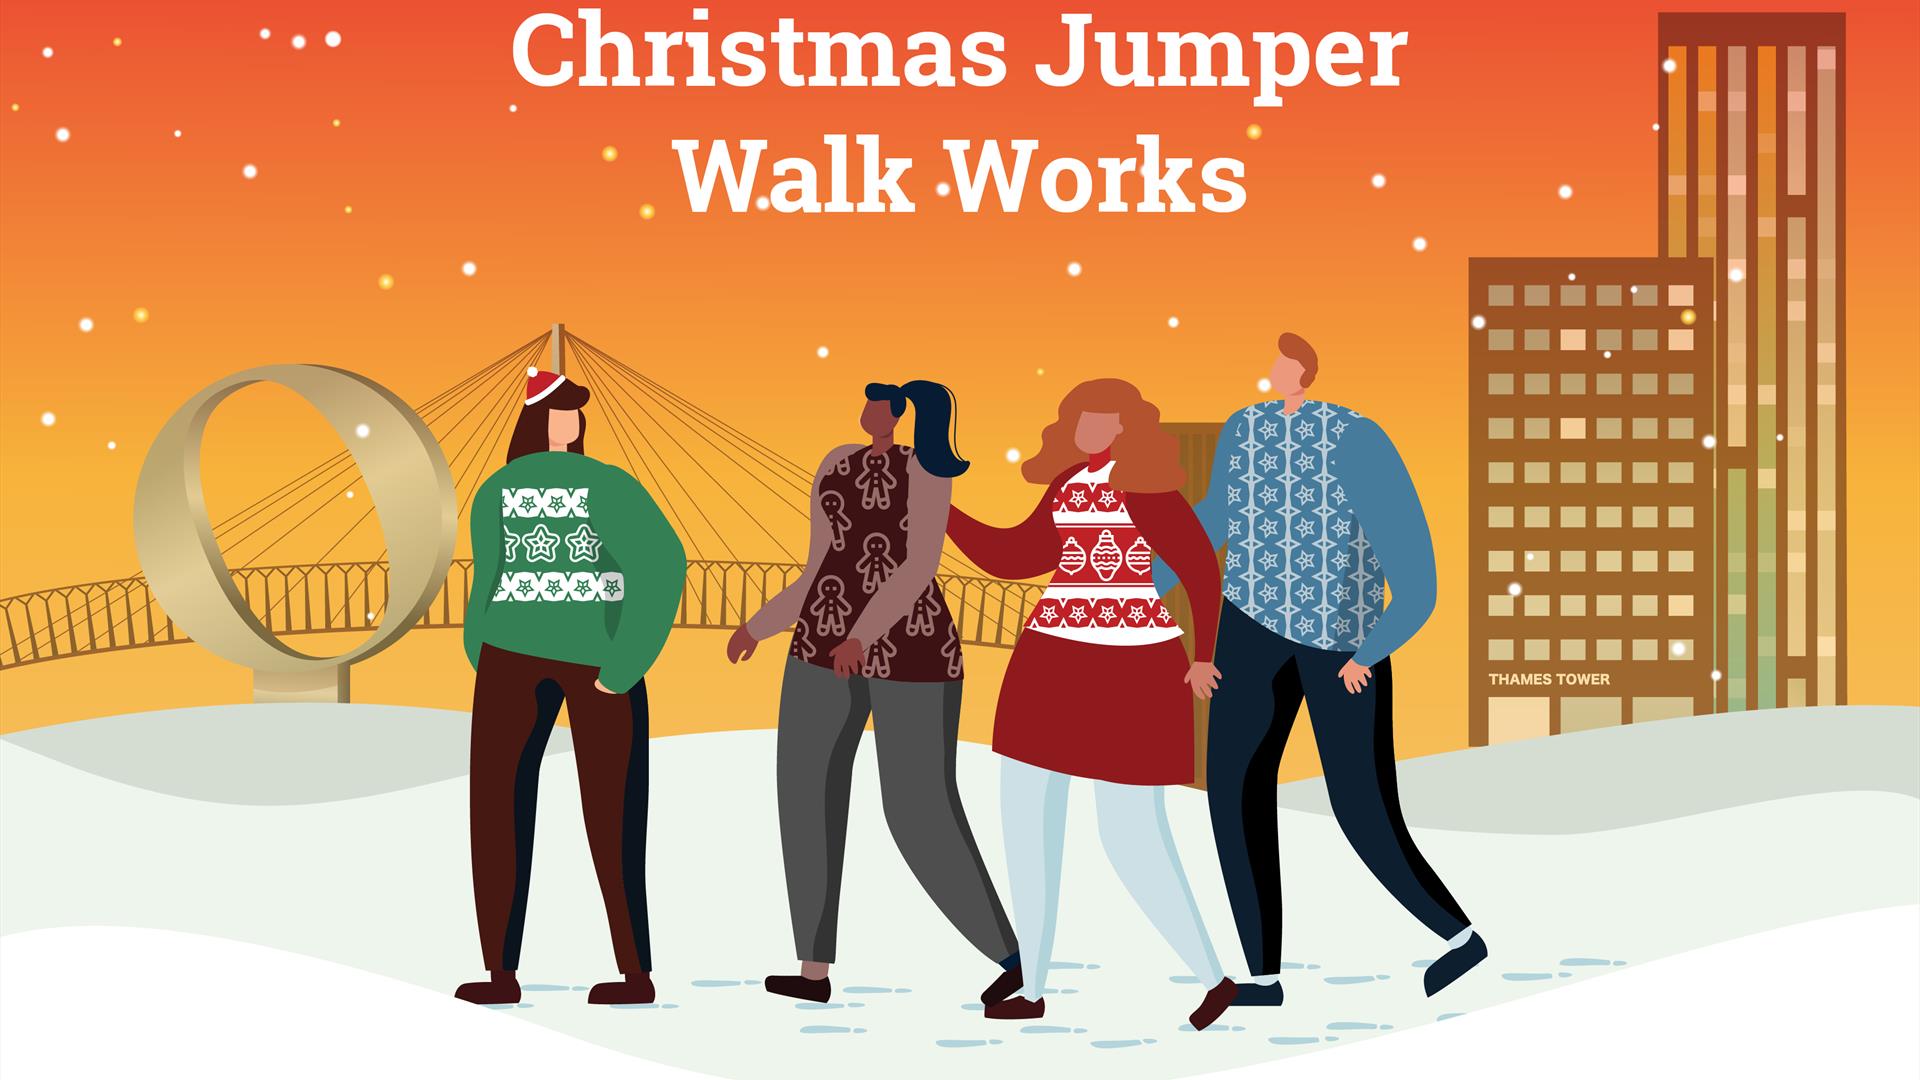 Christmas Jumper Walks Work - 6 Dec